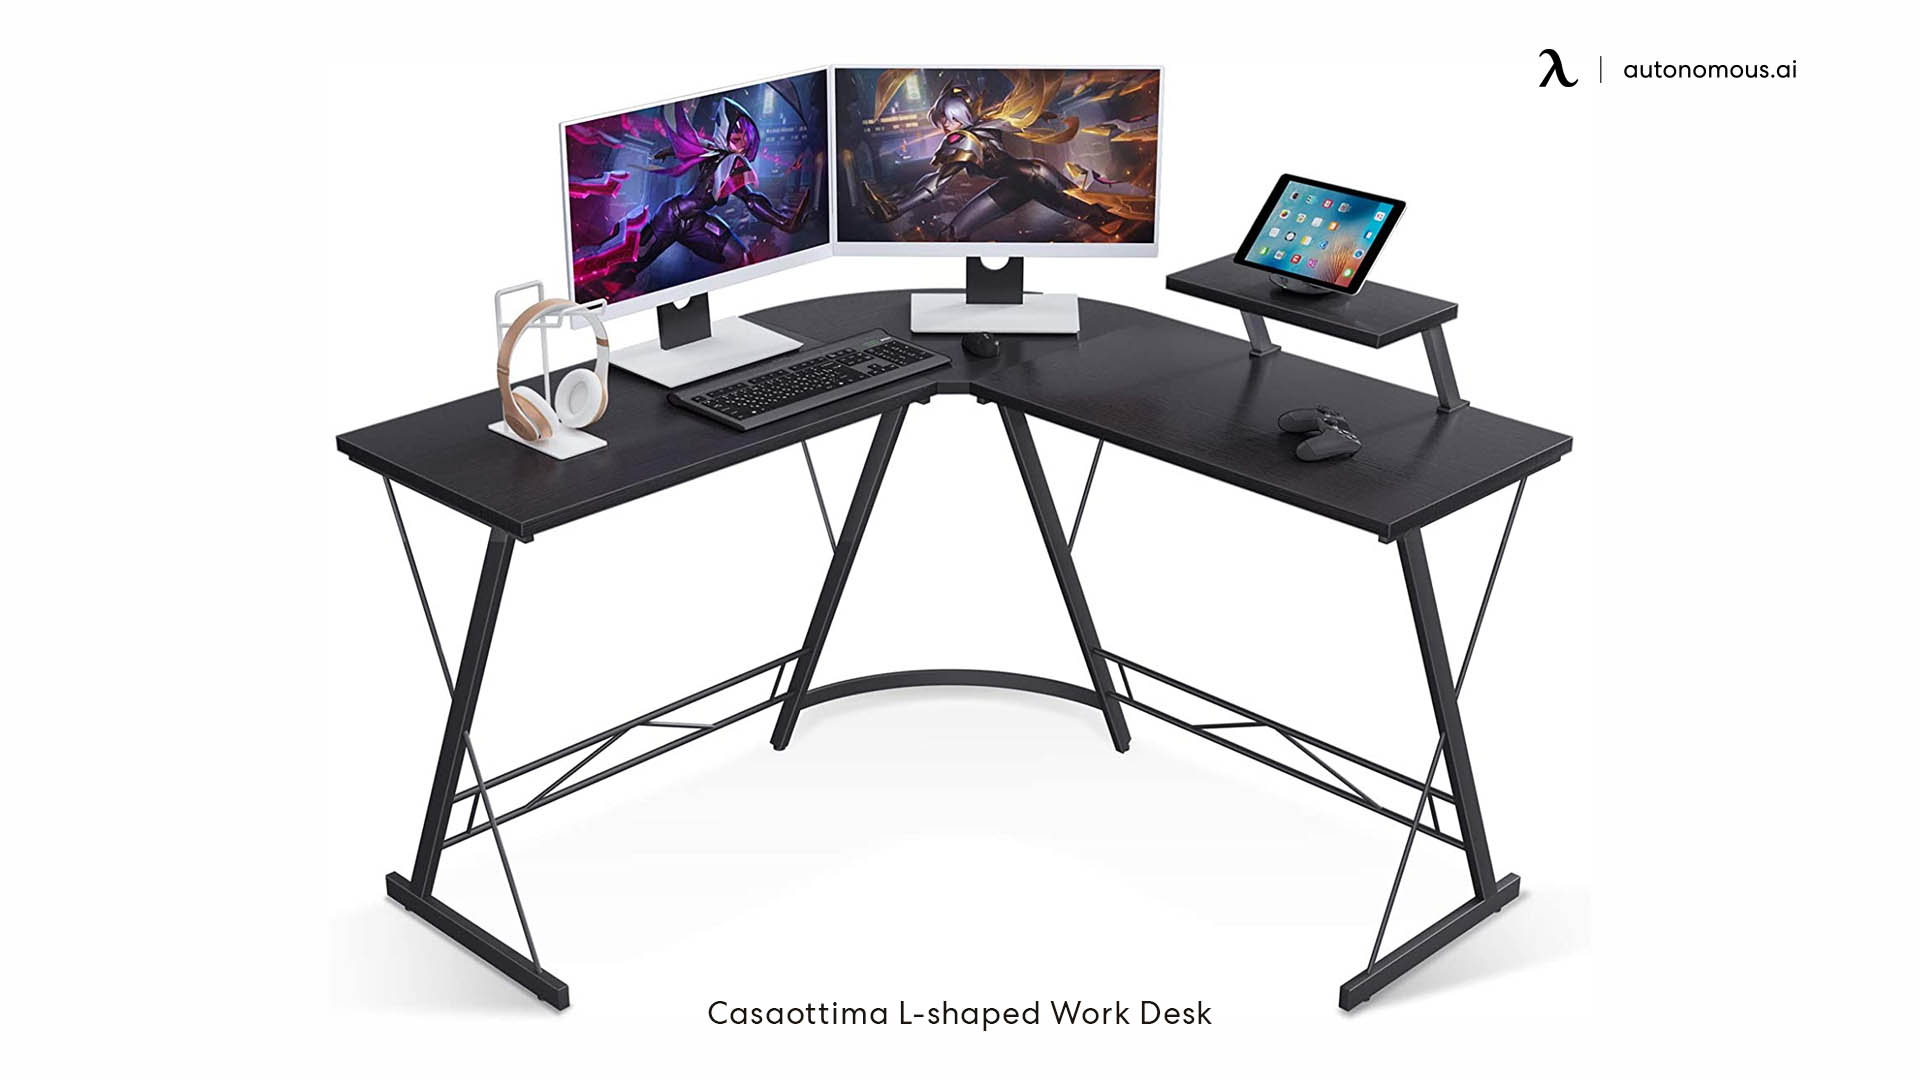 L-shaped Desk by Cassaotima